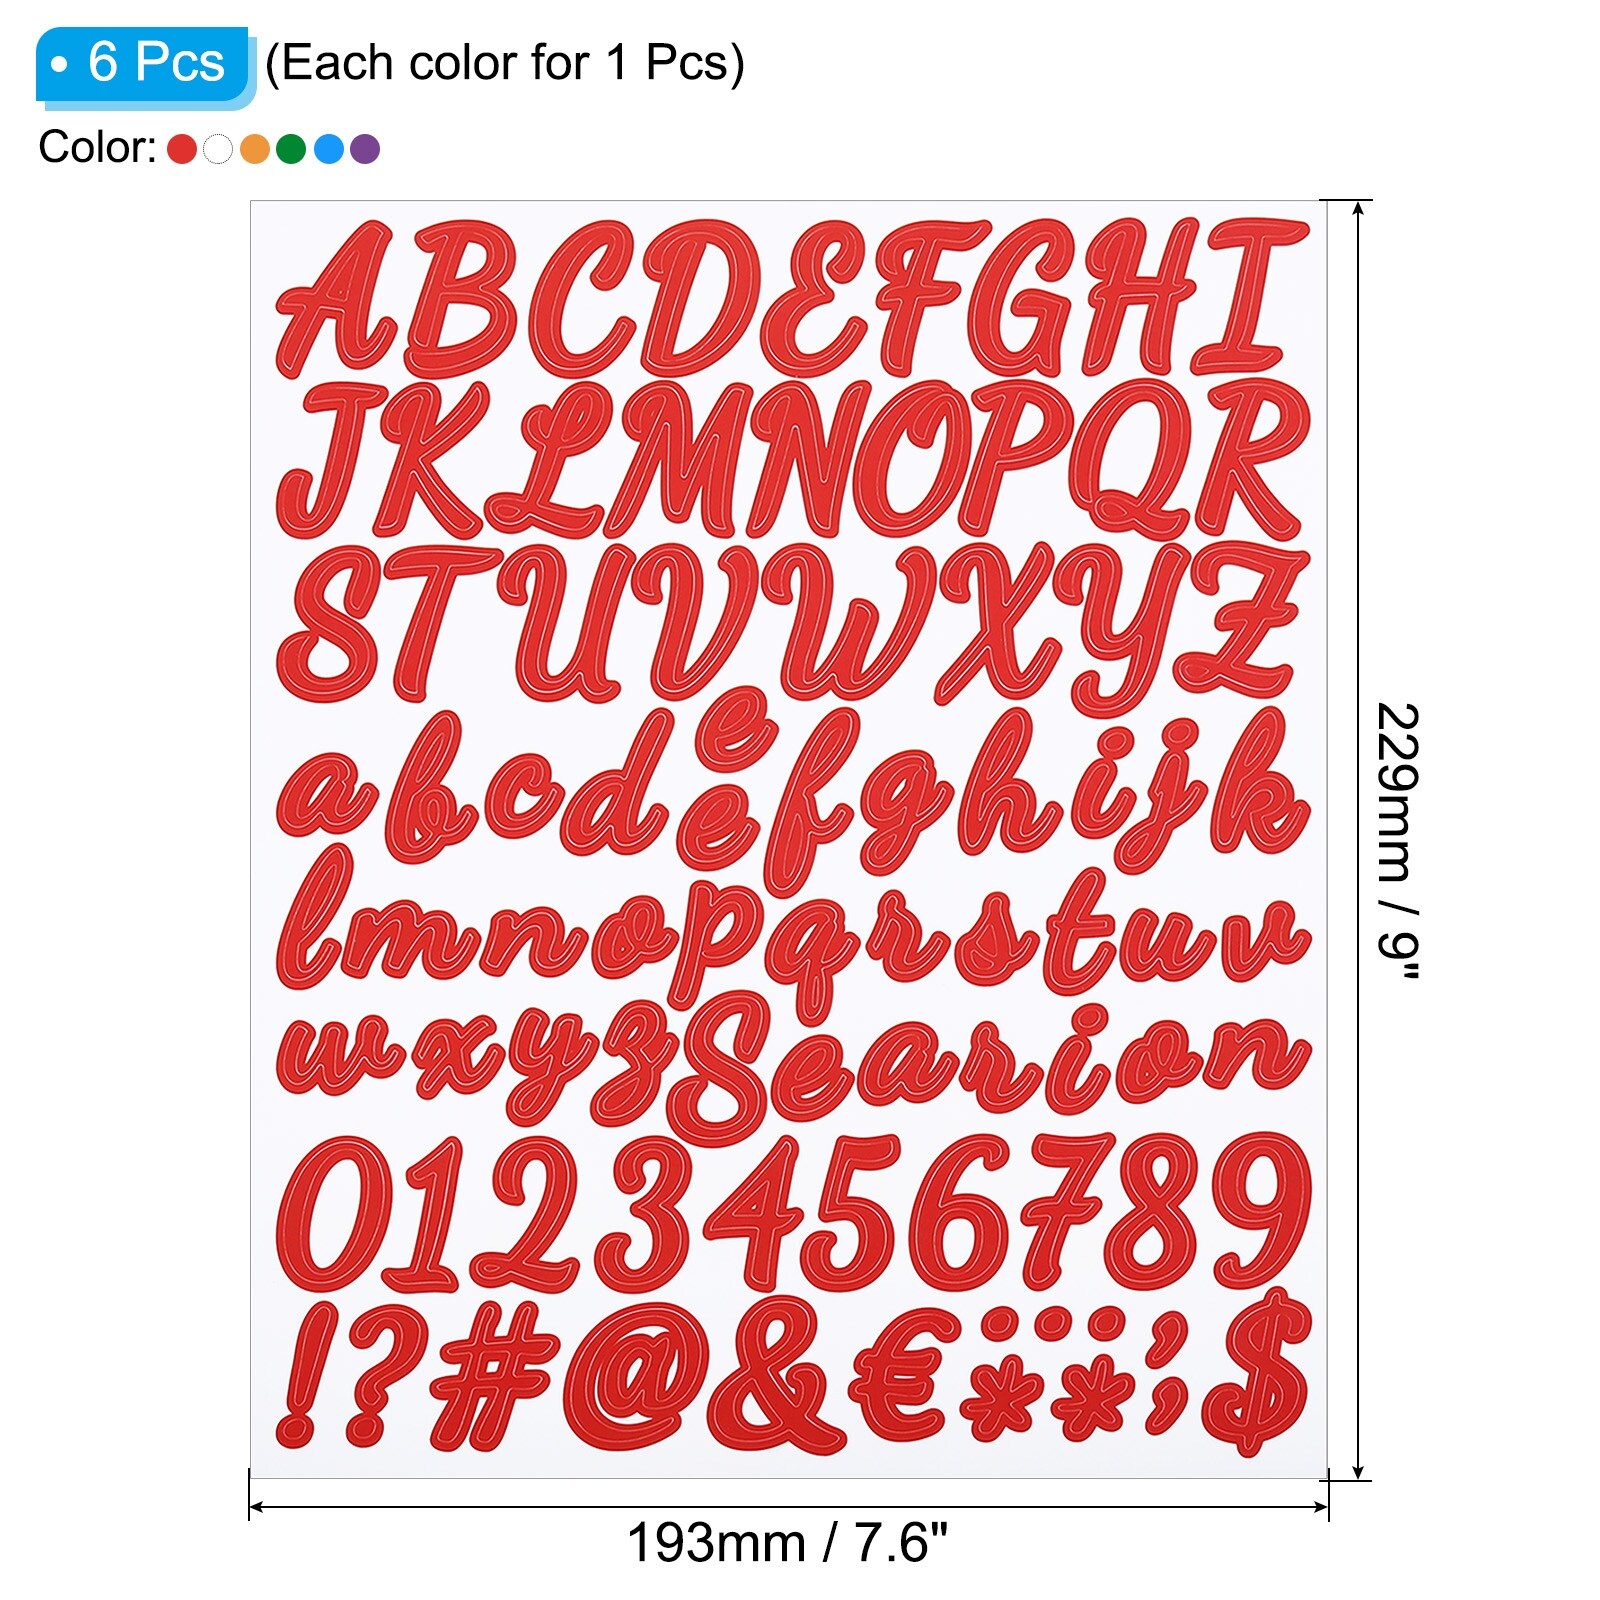 6PCS Small Letter Stickers Waterproof Letter Nail Art Sticker